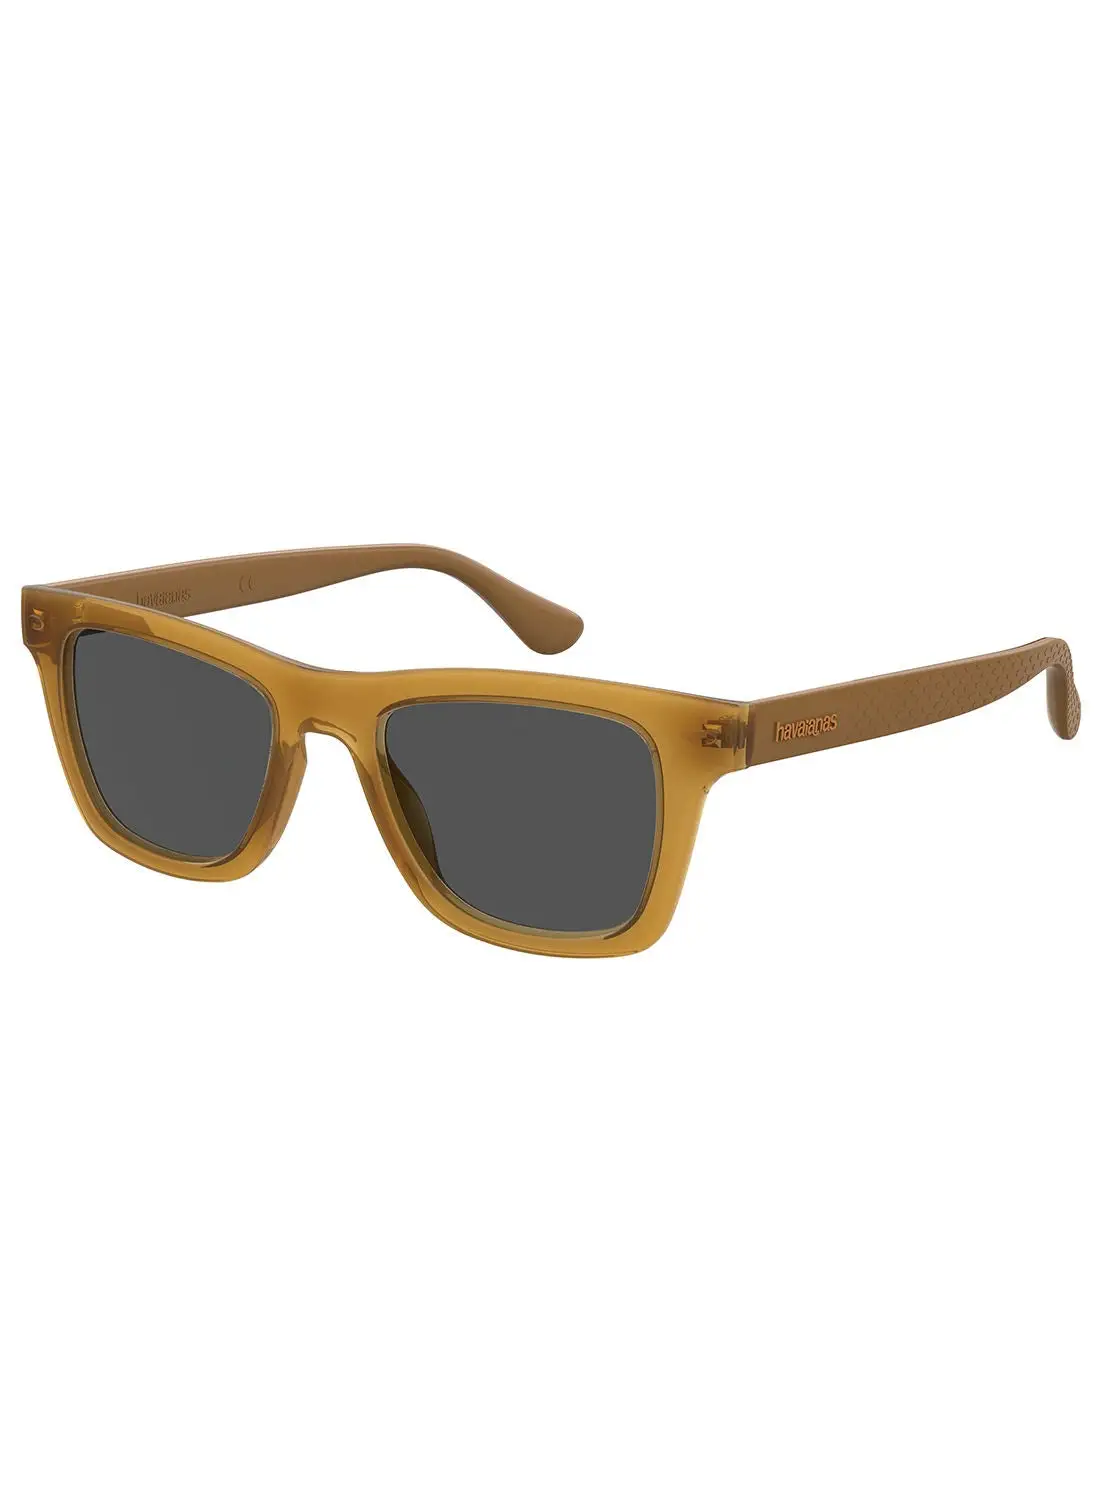 havaianas Unisex UV Protection Square Sunglasses - Aracati Honey Gd 51 - Lens Size: 51 Mm